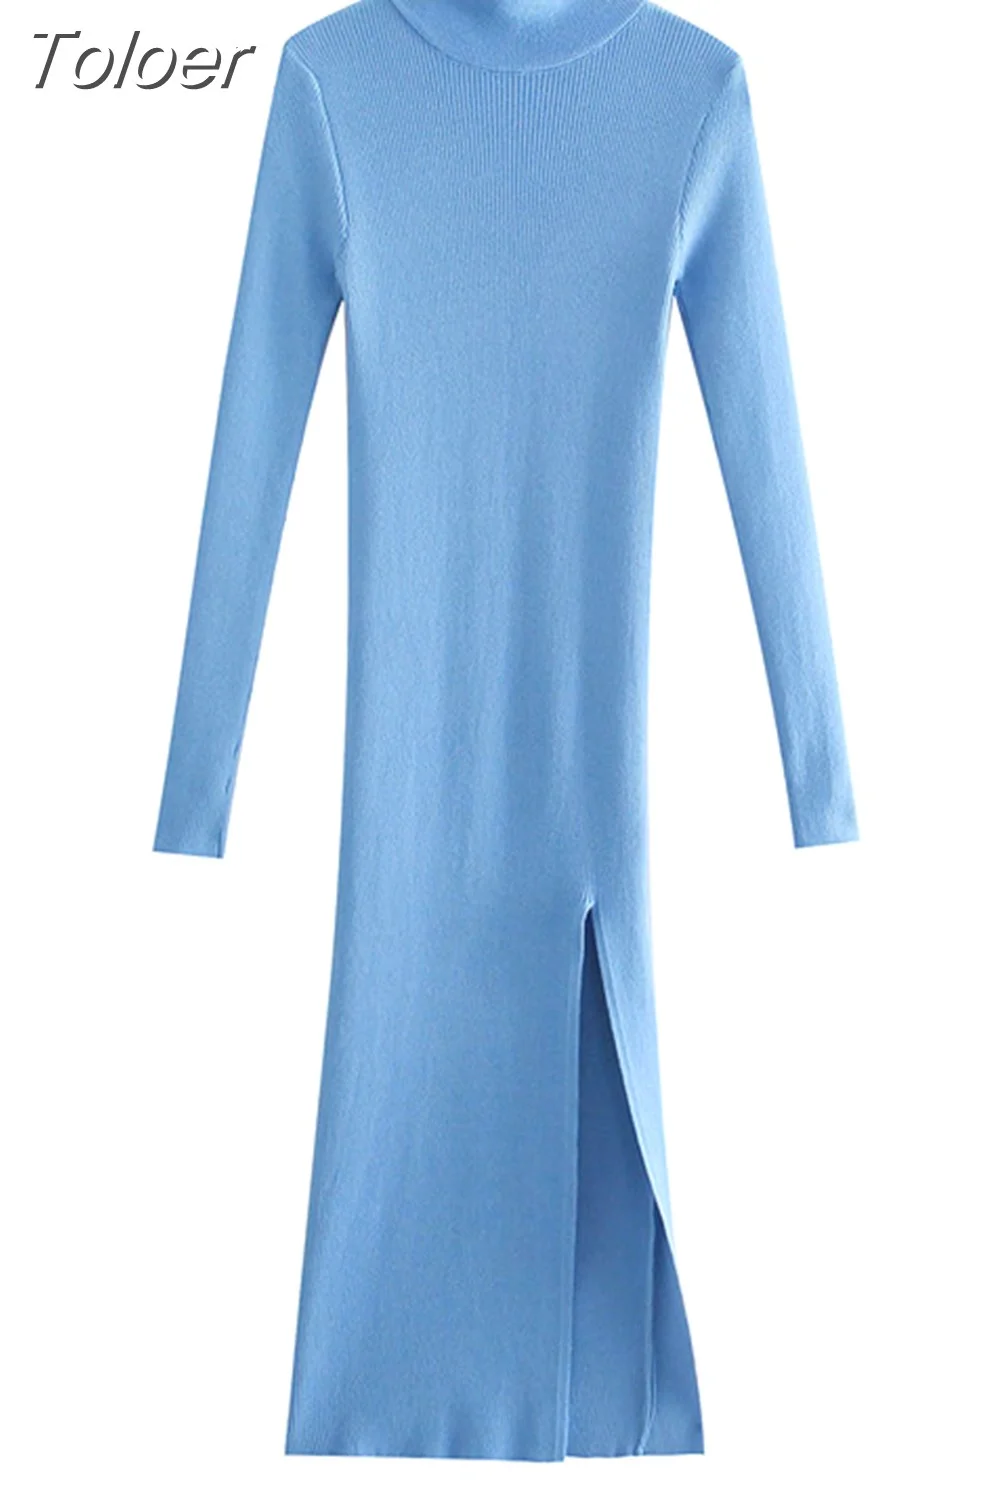 Toloer MODA 2023 Women Chic Fashion Front Slit Sheath Knit Midi Dress Vintage High Neck Long Sleeve Female Dresses Vestidos Mujer